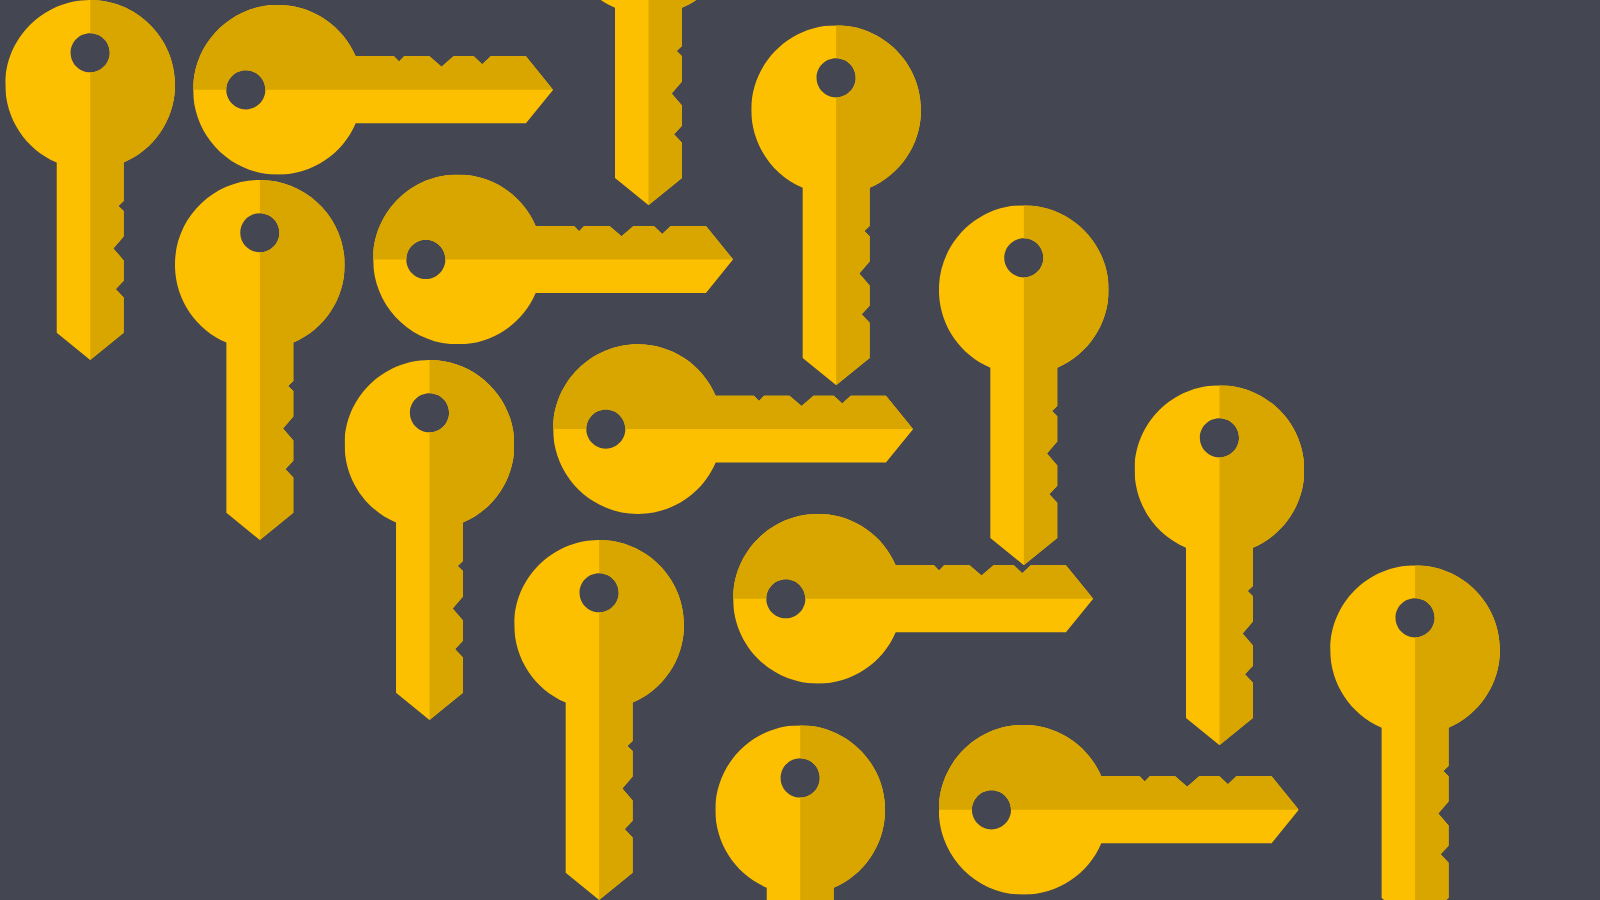 Keys in a rotating pattern